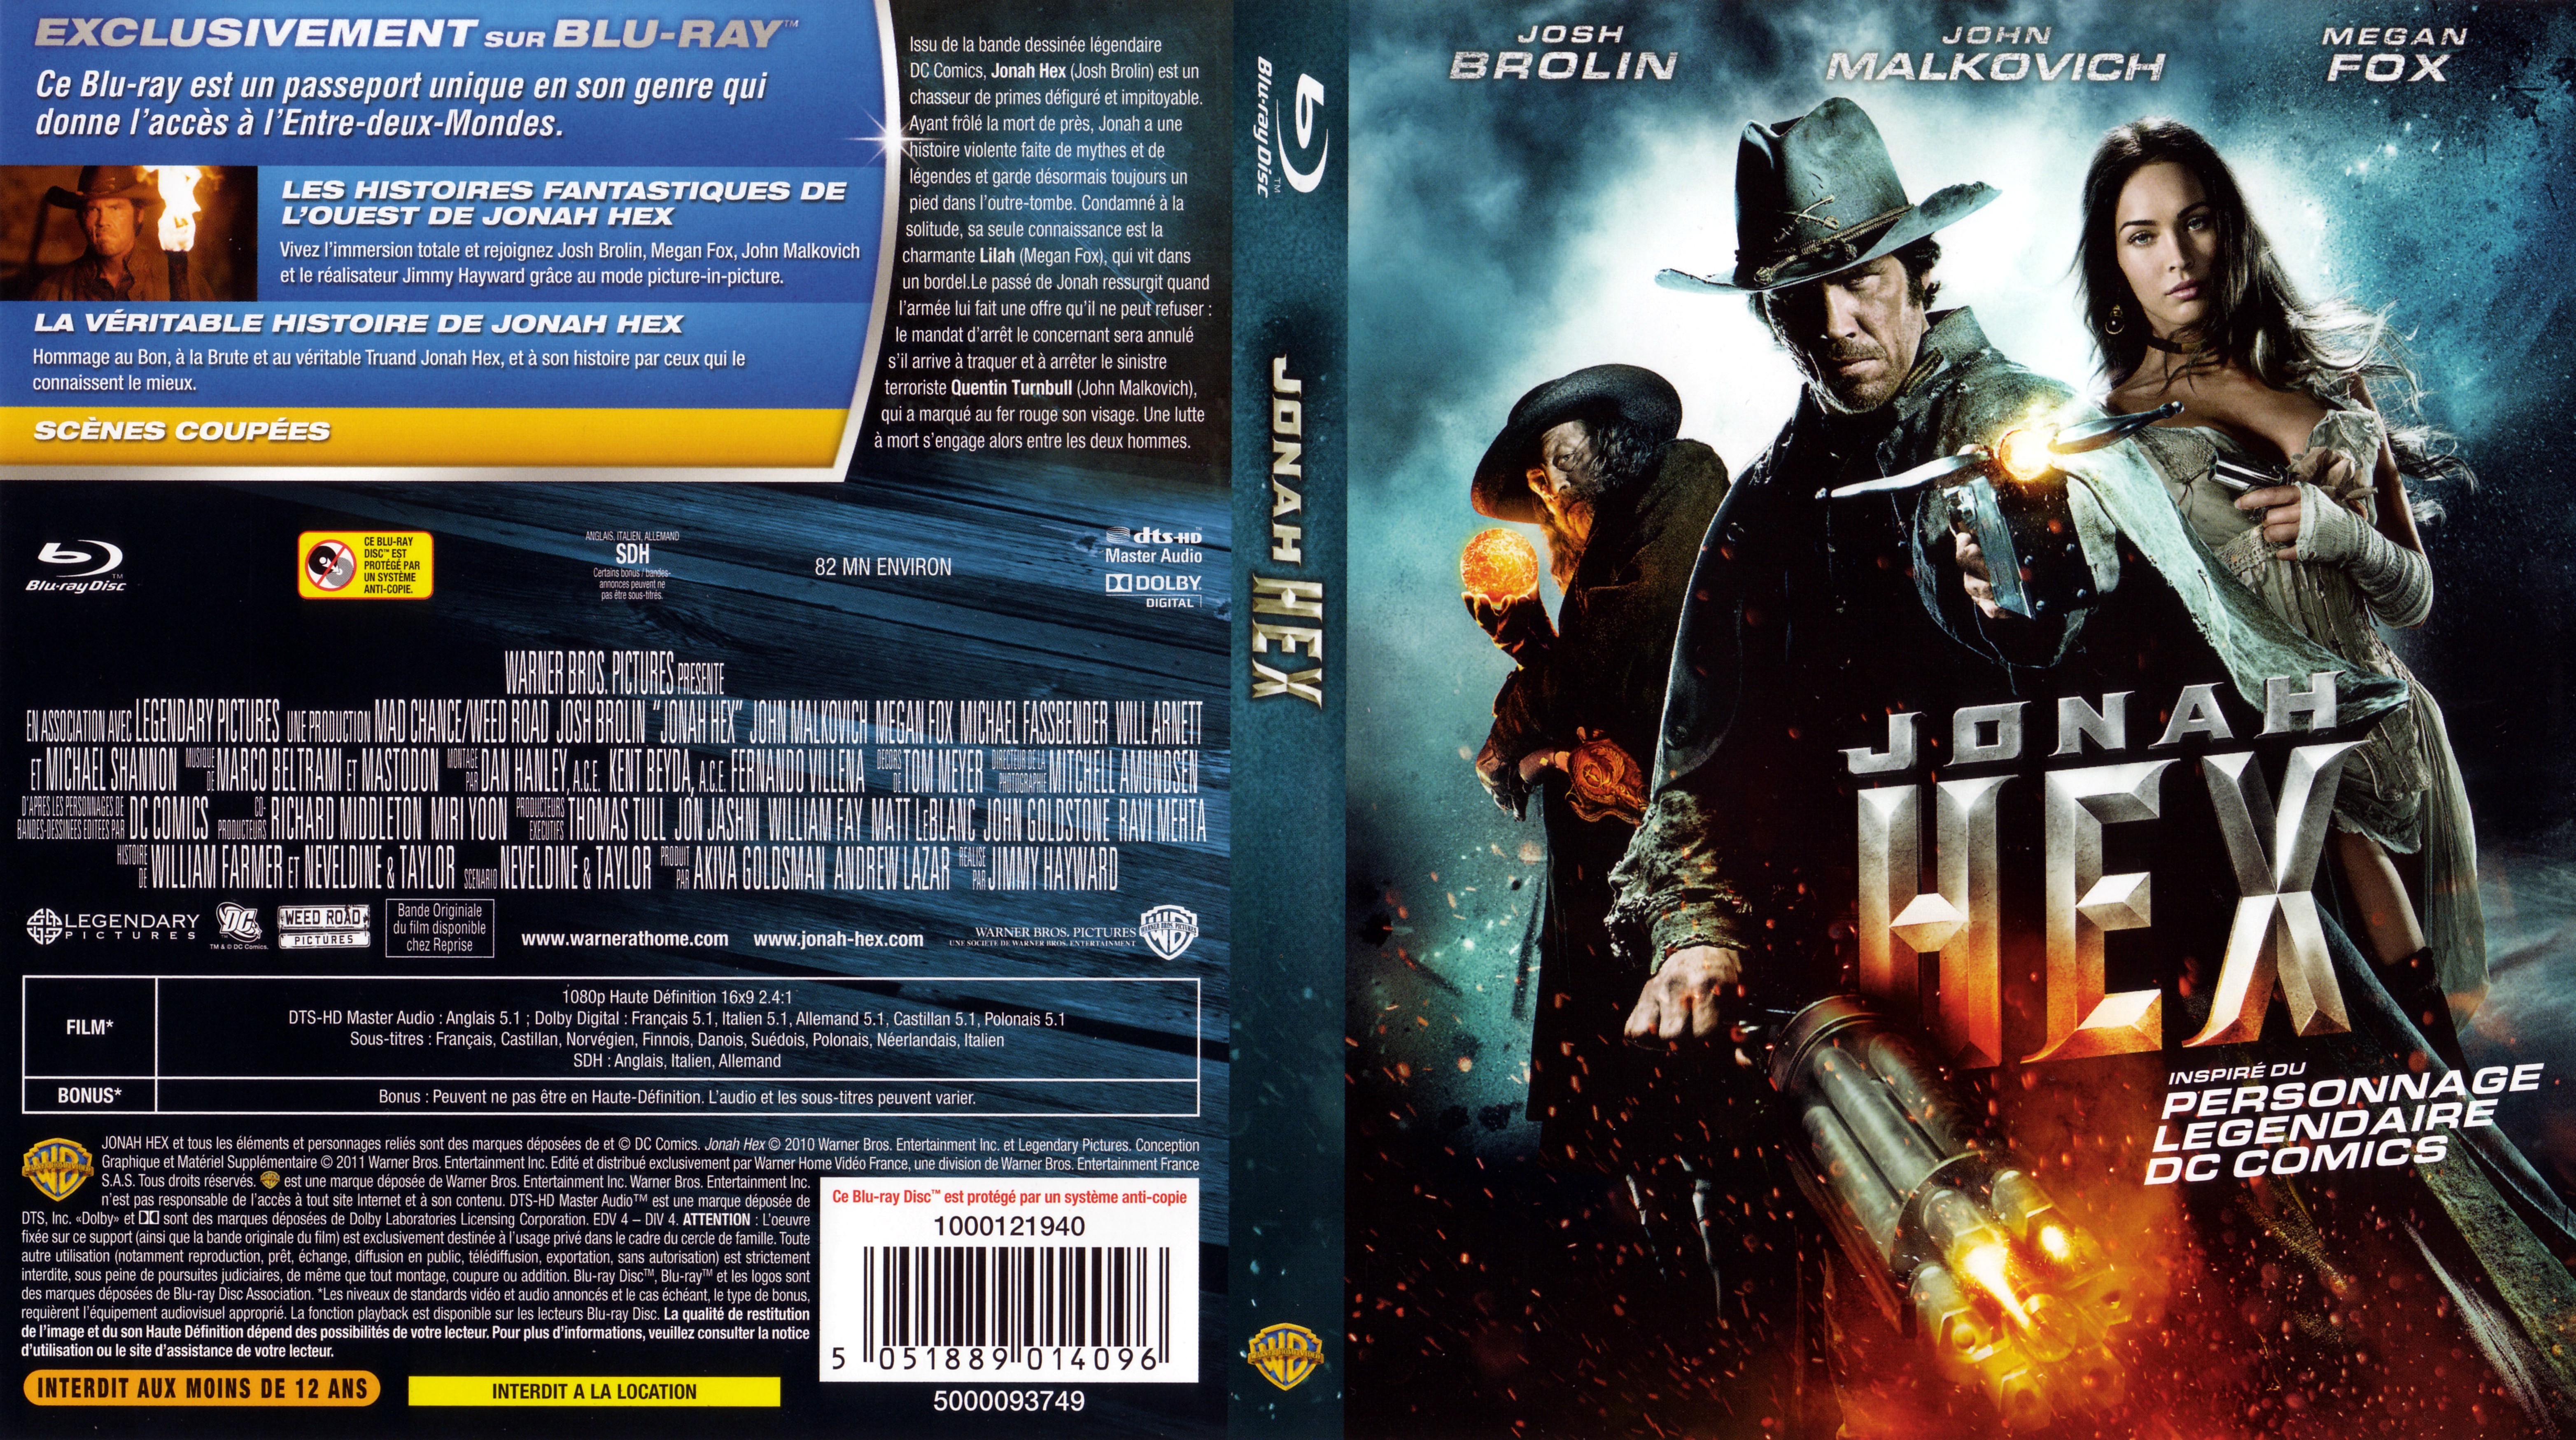 Jaquette DVD Jonah Hex (BLU-RAY) v2